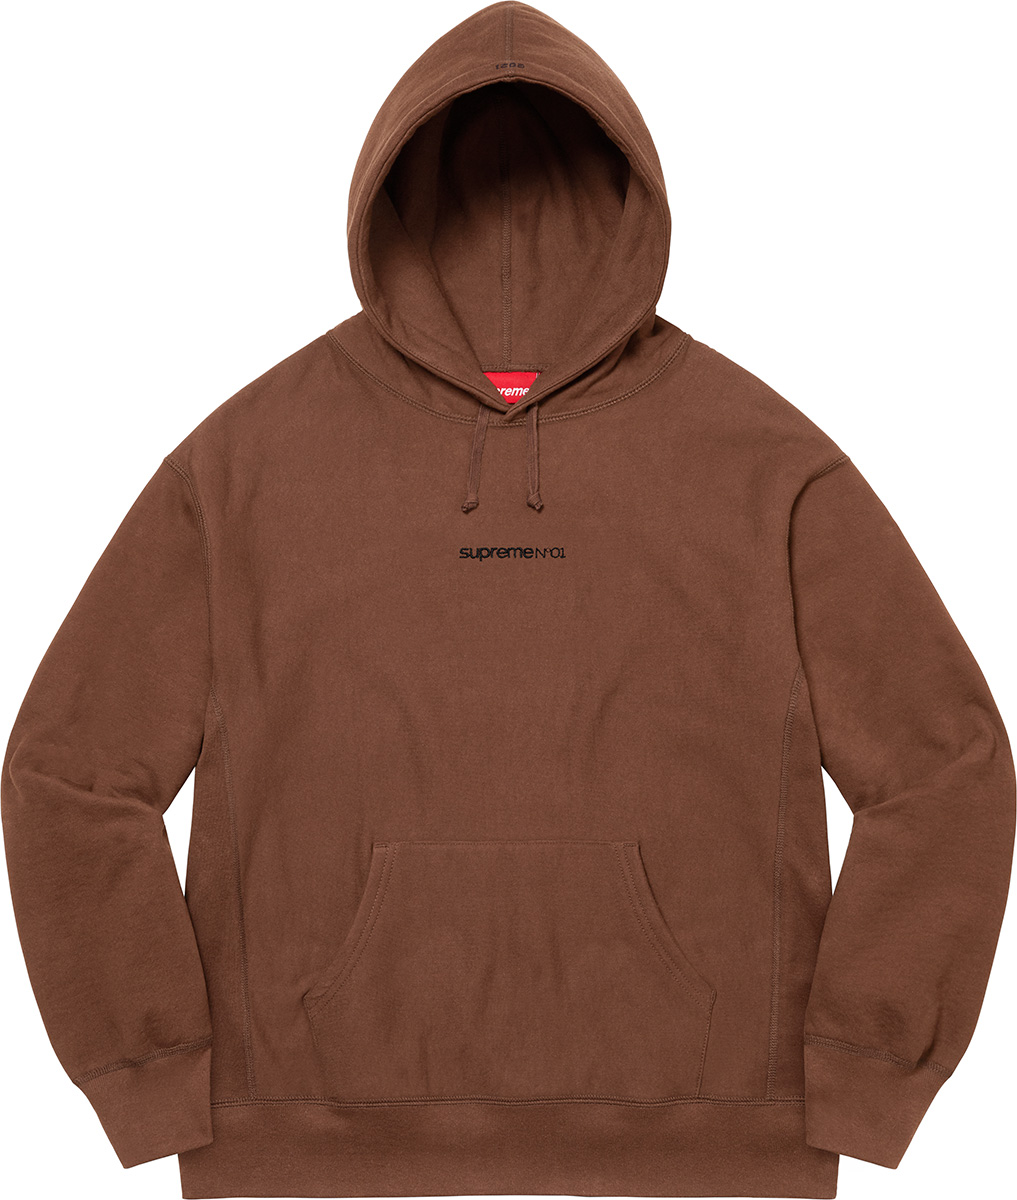 supreme-21aw-21fw-number-one-hooded-sweatshirt